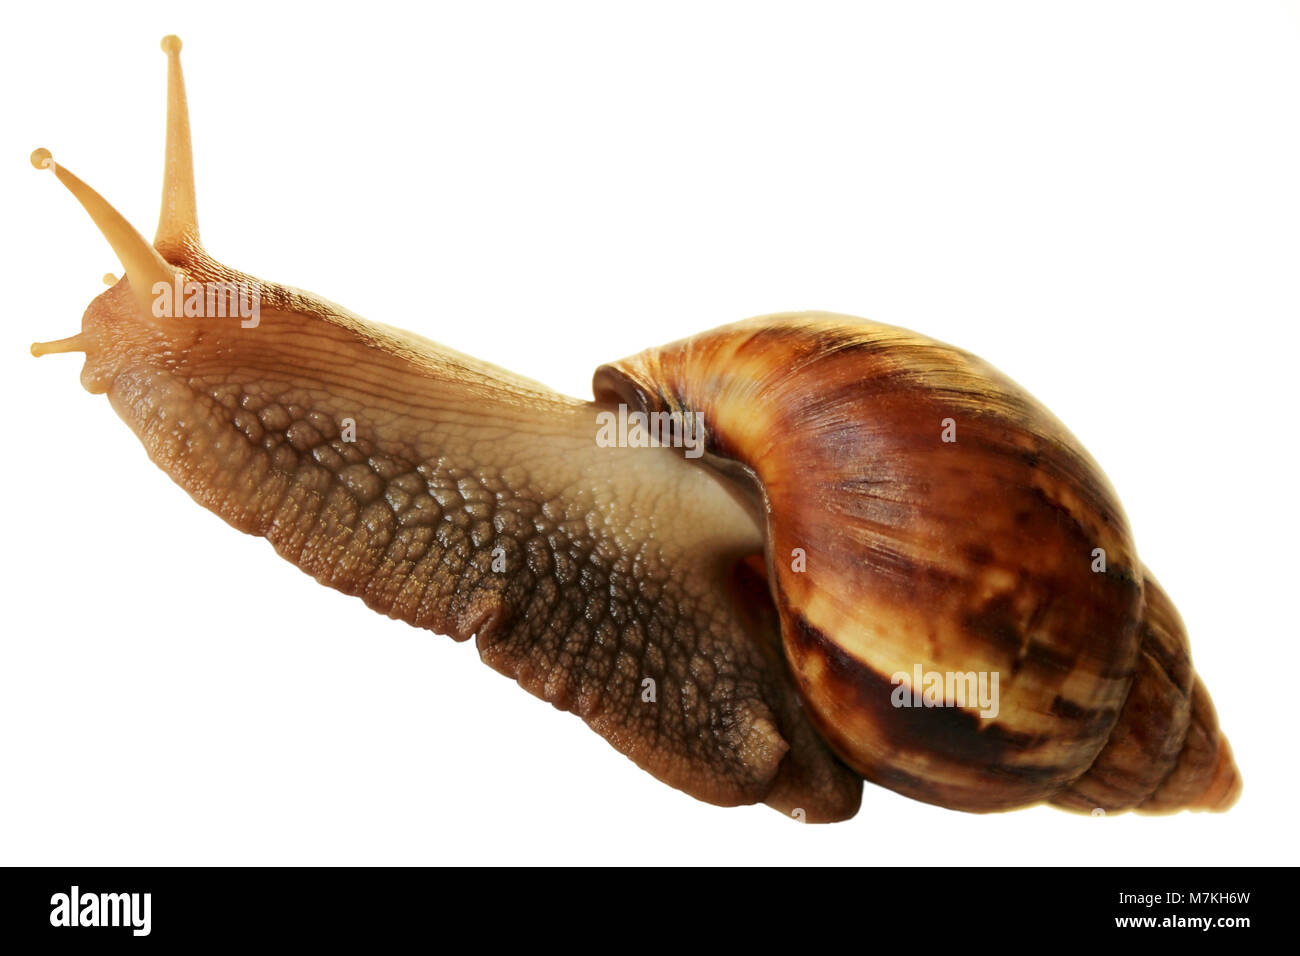 Achatina snail isolated on white background. Stock Photo